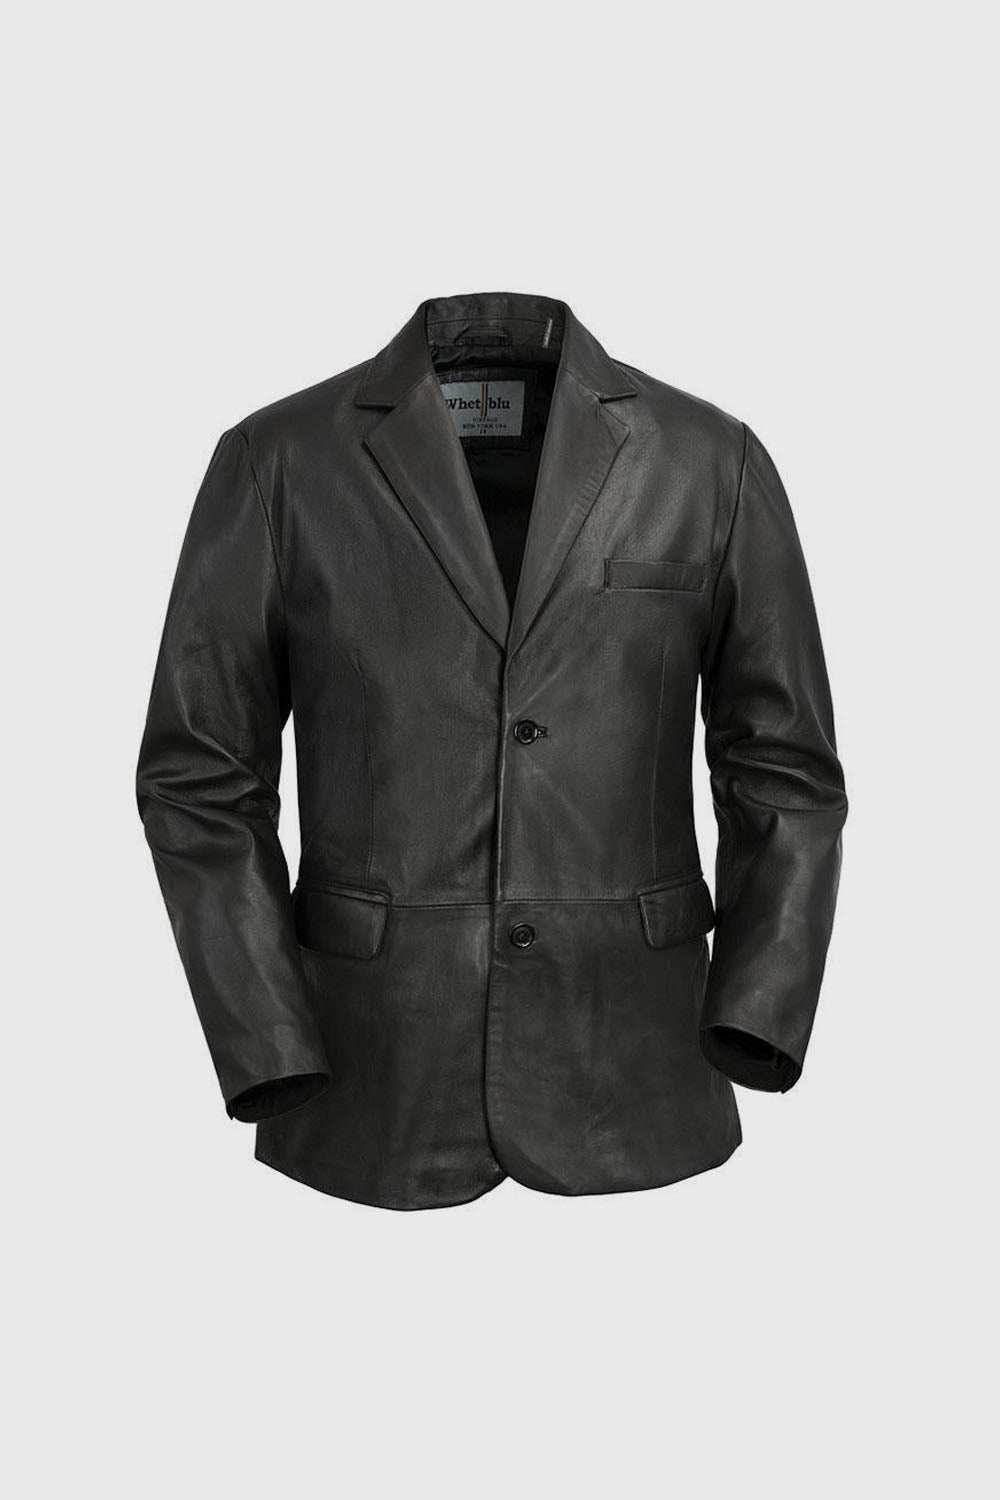 Esquire Mens Leather Jacket Black